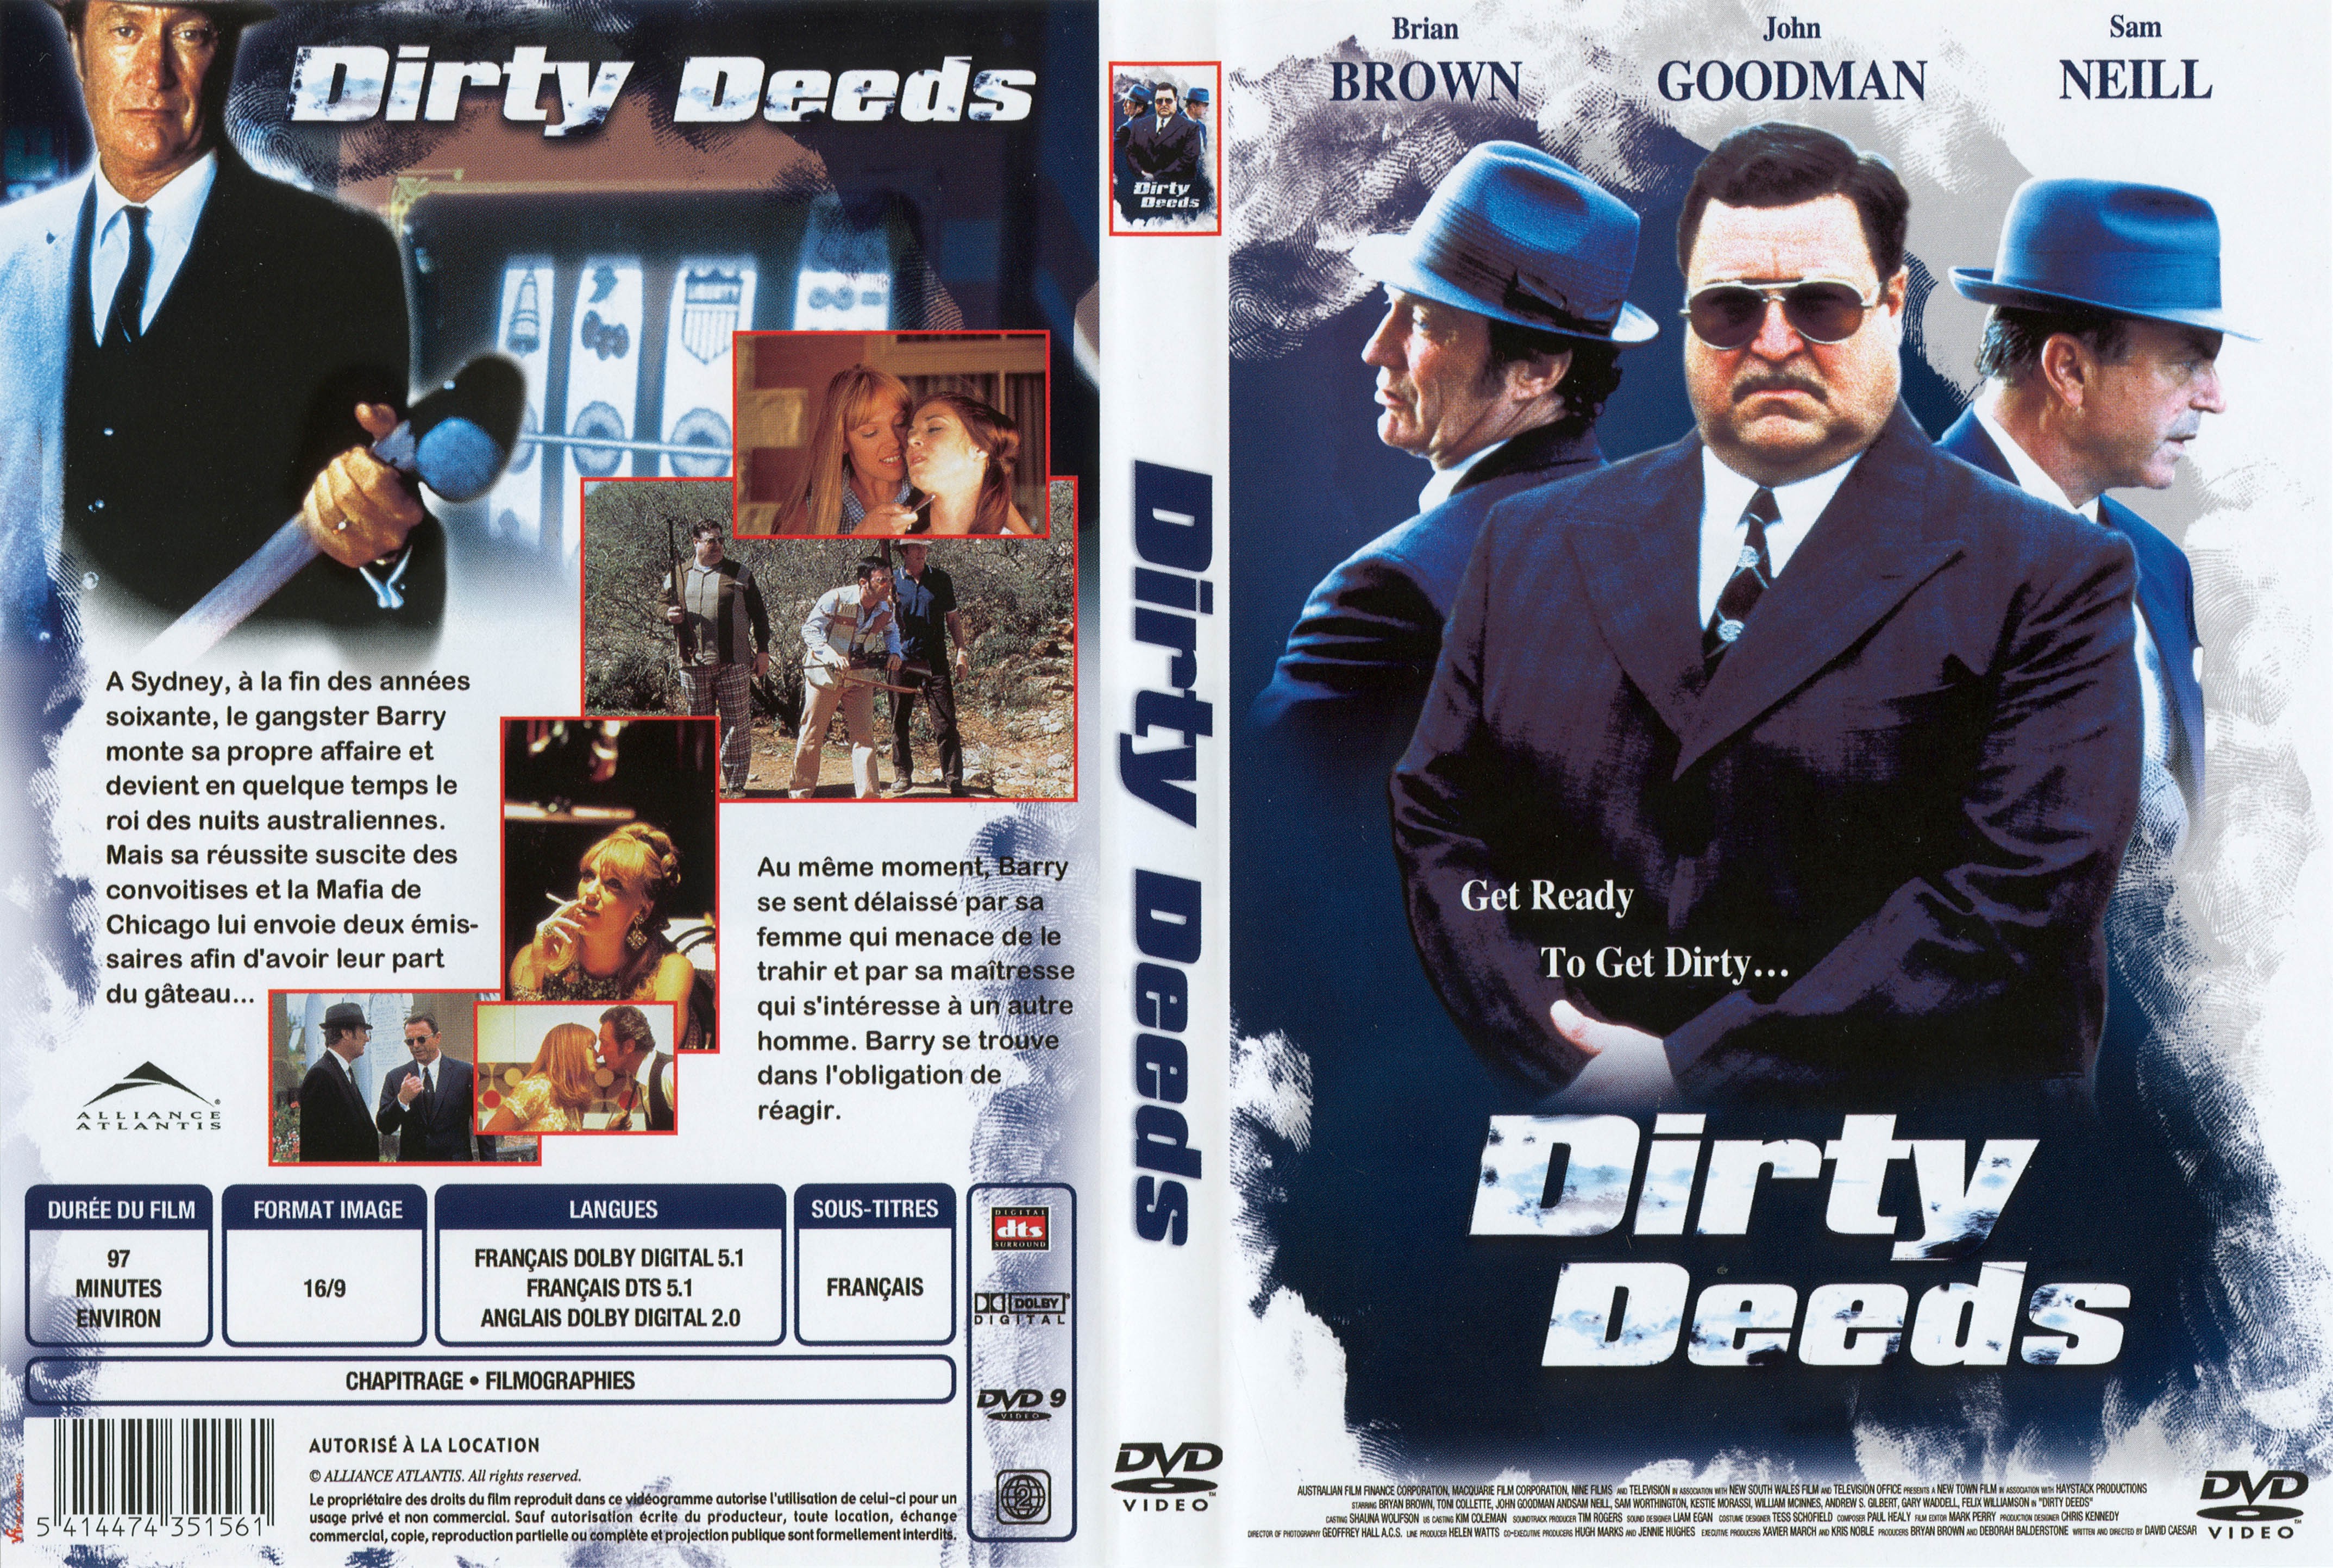 Jaquette DVD Dirty Deeds